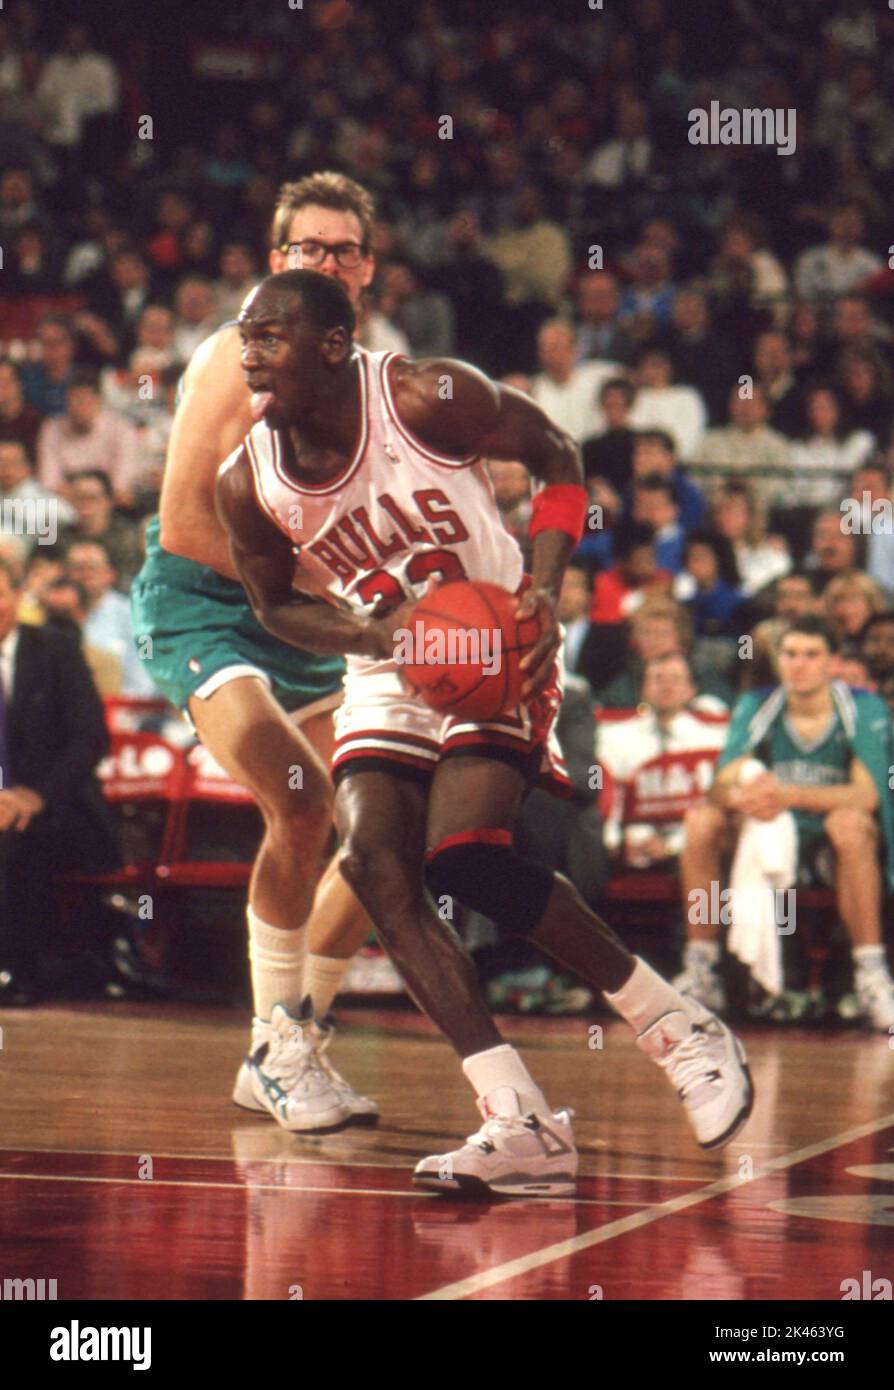 NBA superstar Michael Jordan of the Chicago Bulls Stock Photo